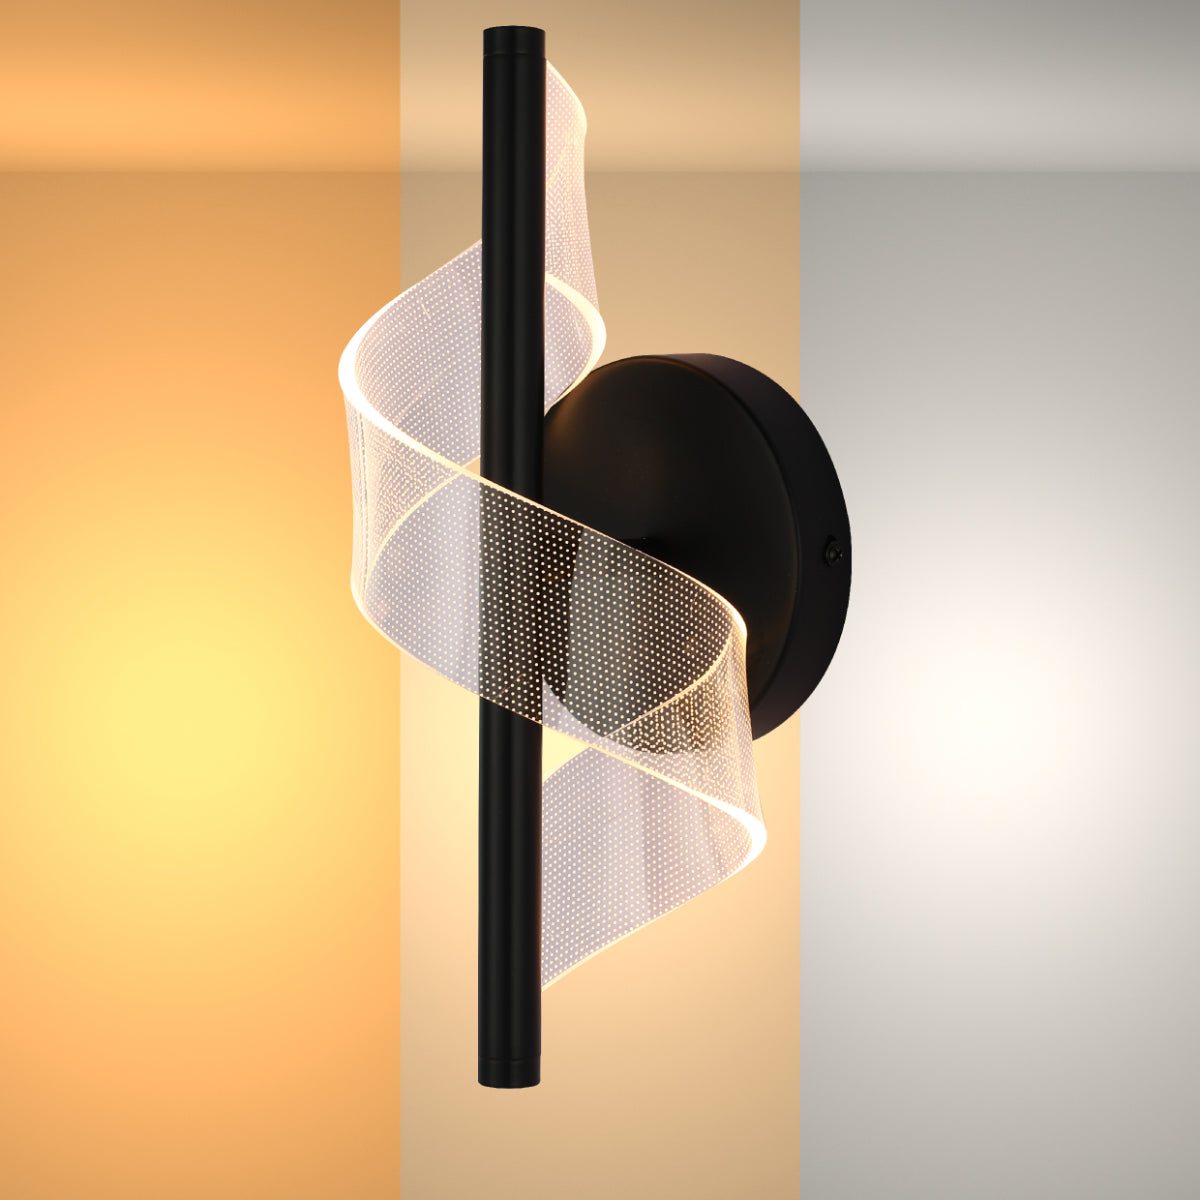 Main image of LED Spiral Modern Wall Sconce Light Chrome CCT Changable 151-19700